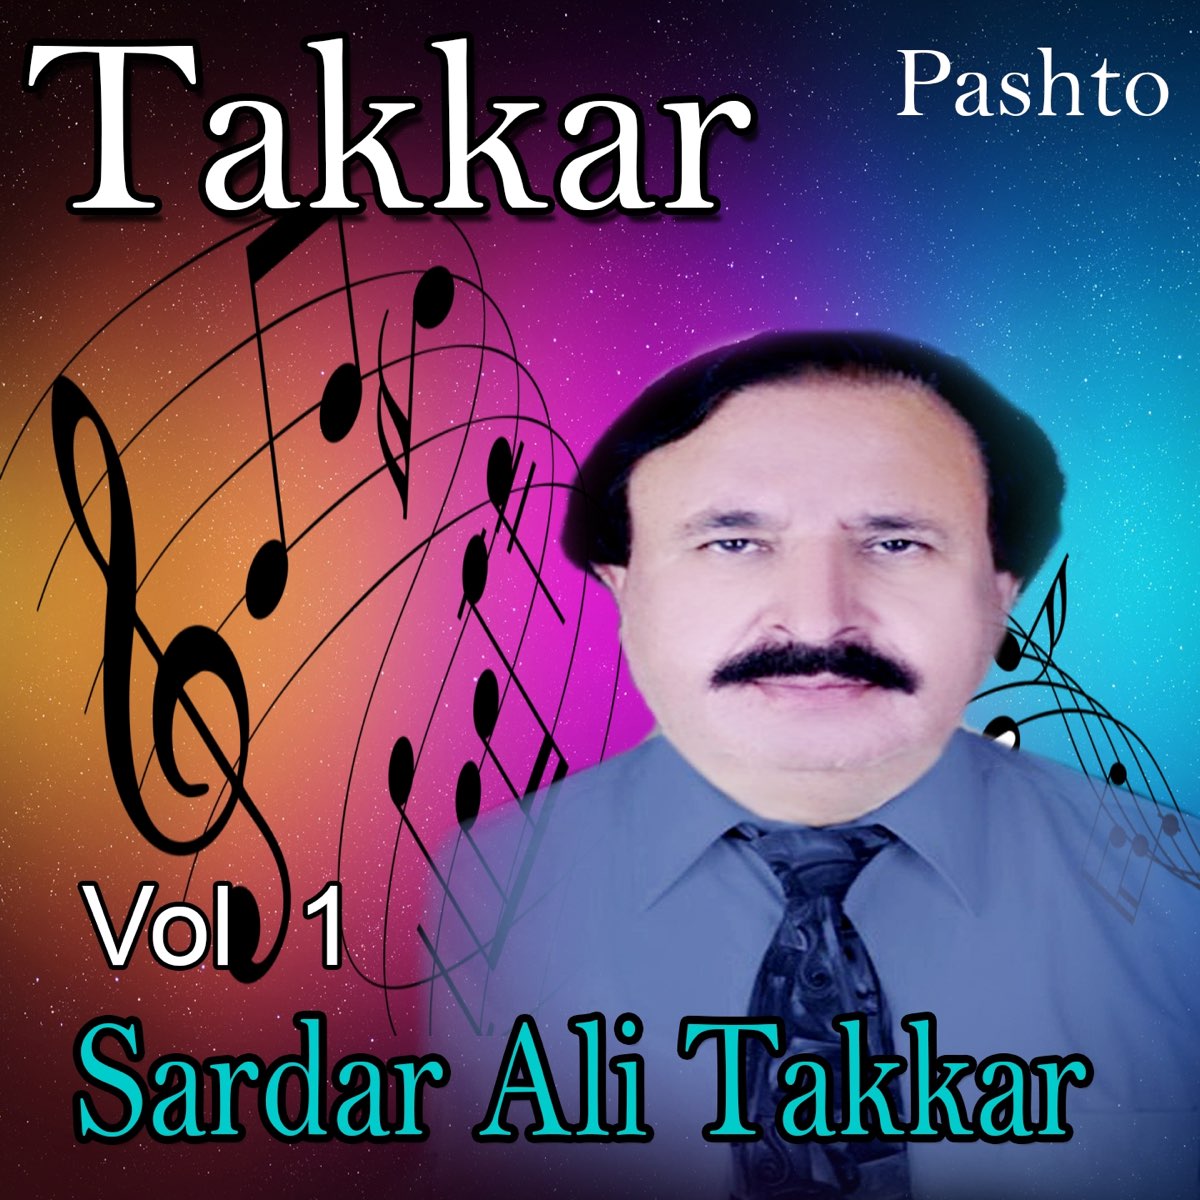 Takkar, Vol. 1 by Sardar Ali Takkar on Apple Music